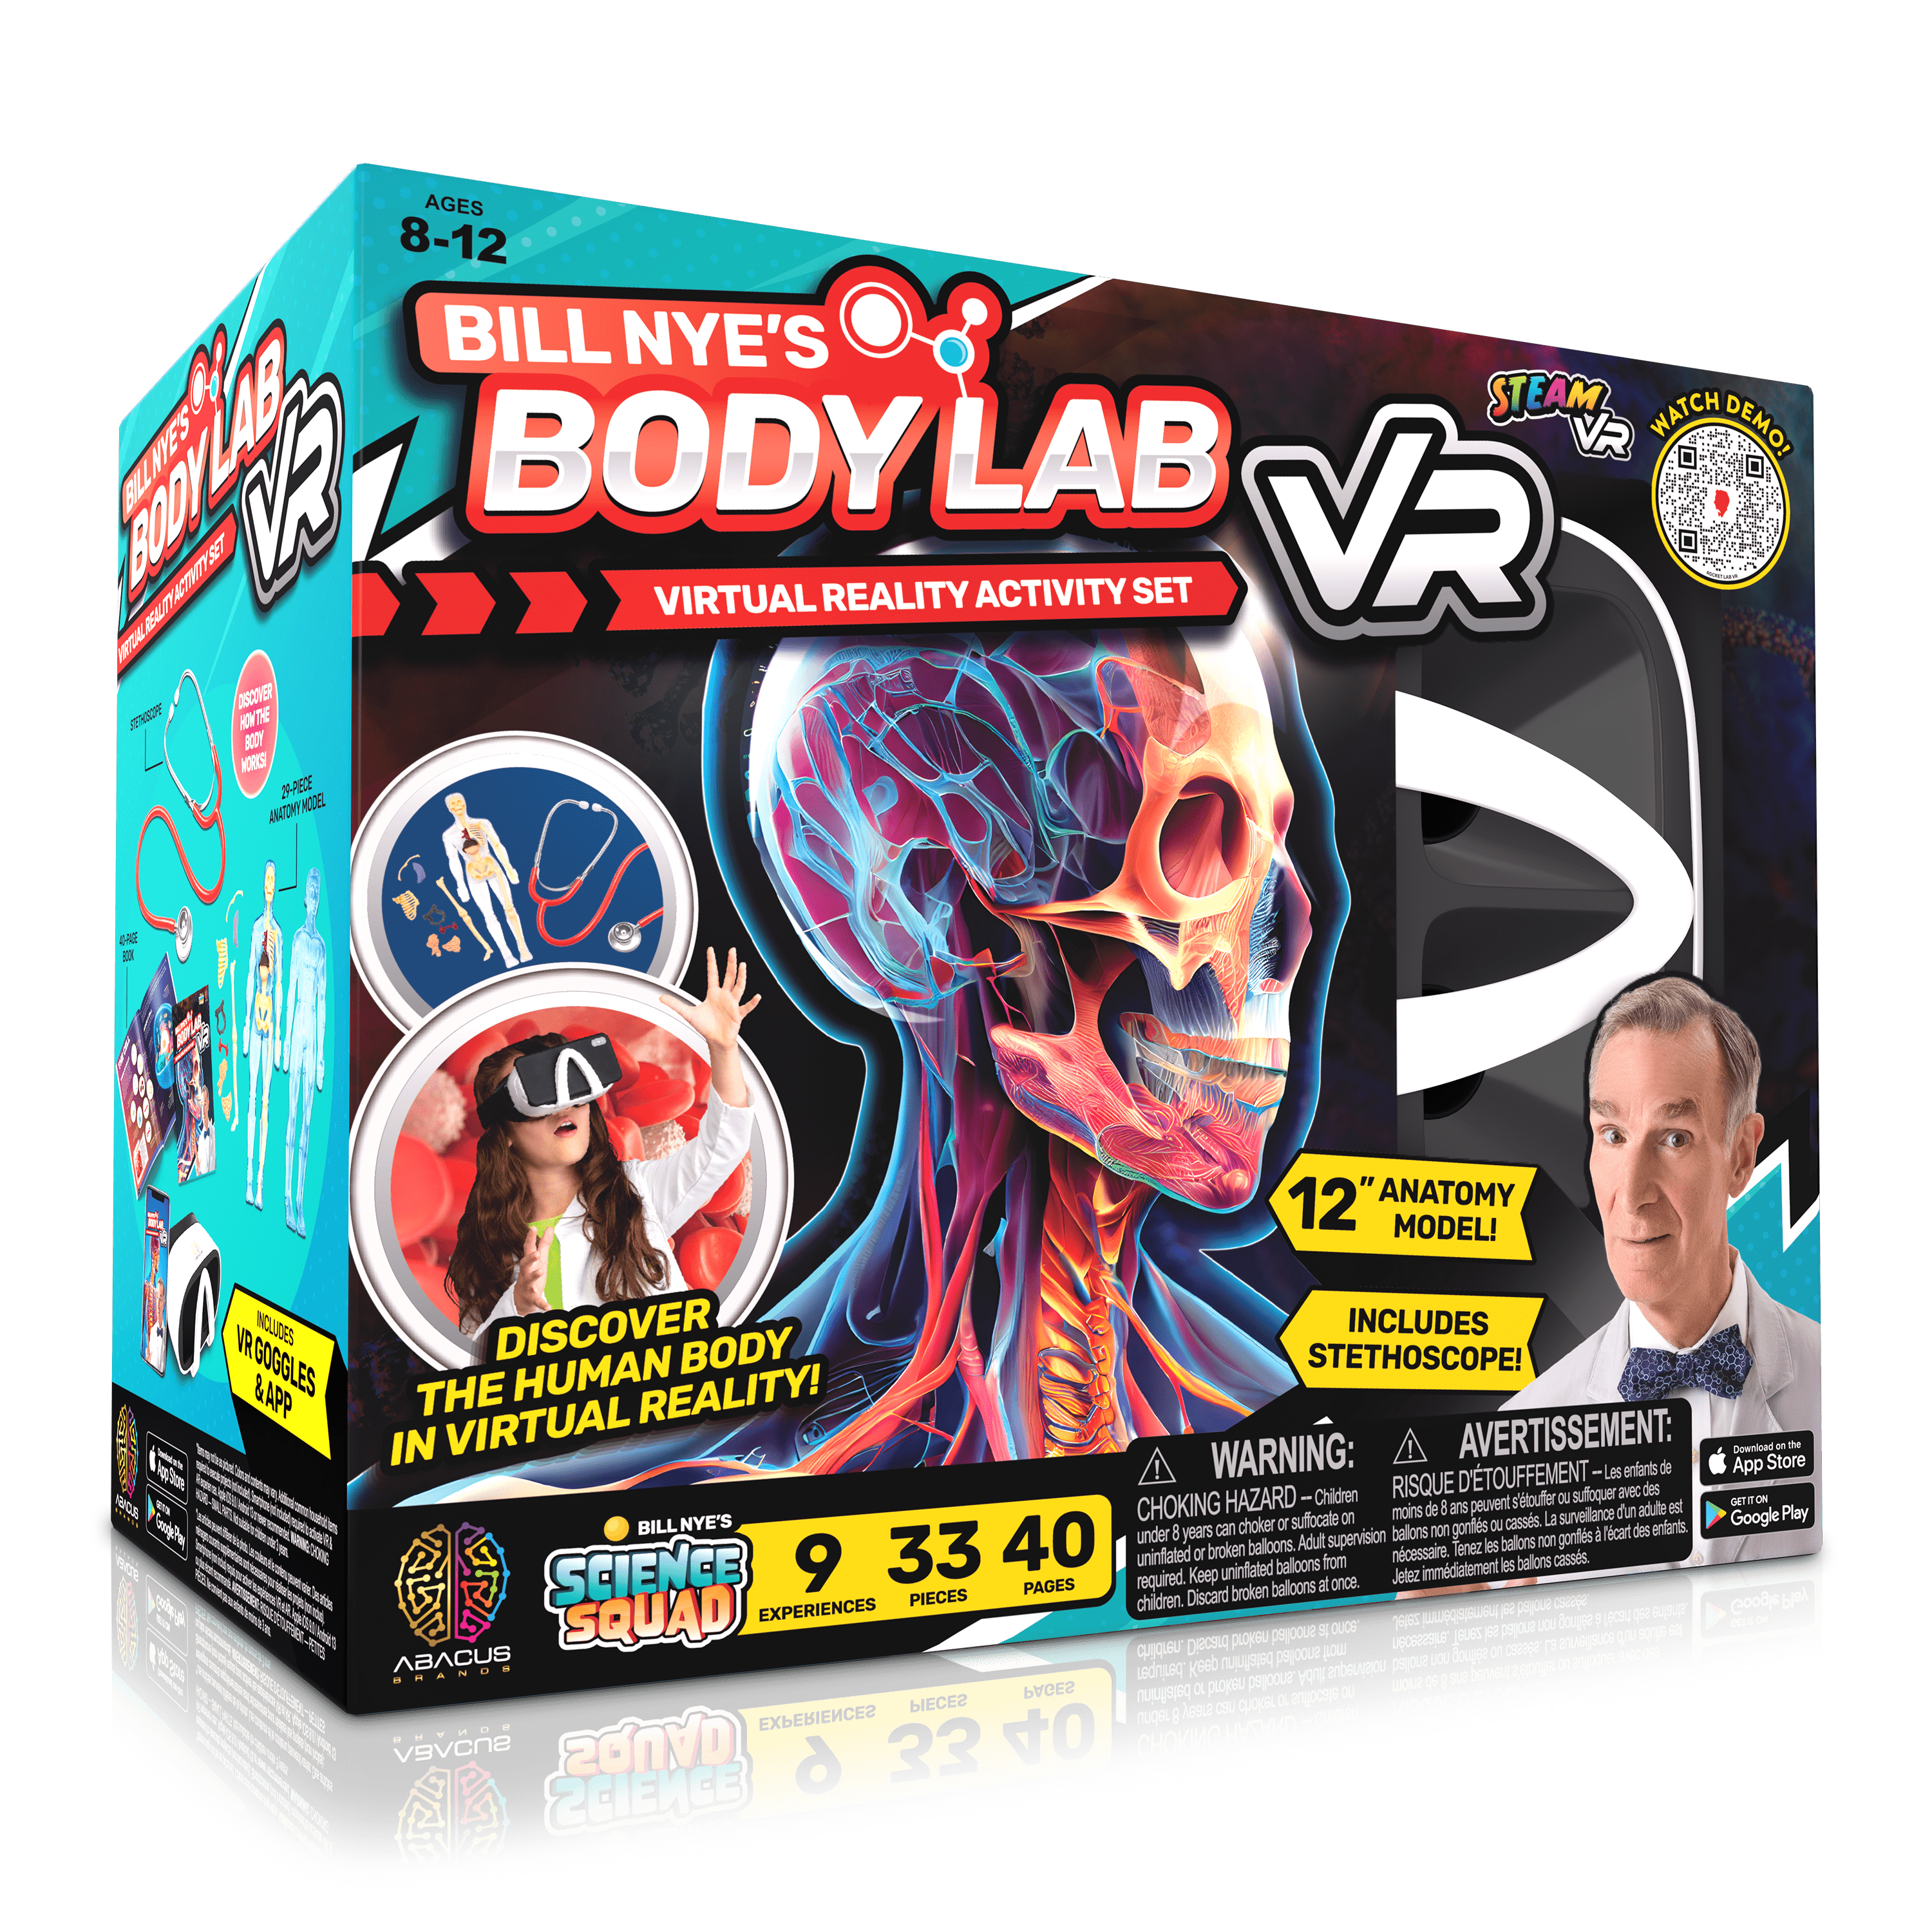 Bill Nye's Virtual Reality Human Body Kit - BODY LAB VR